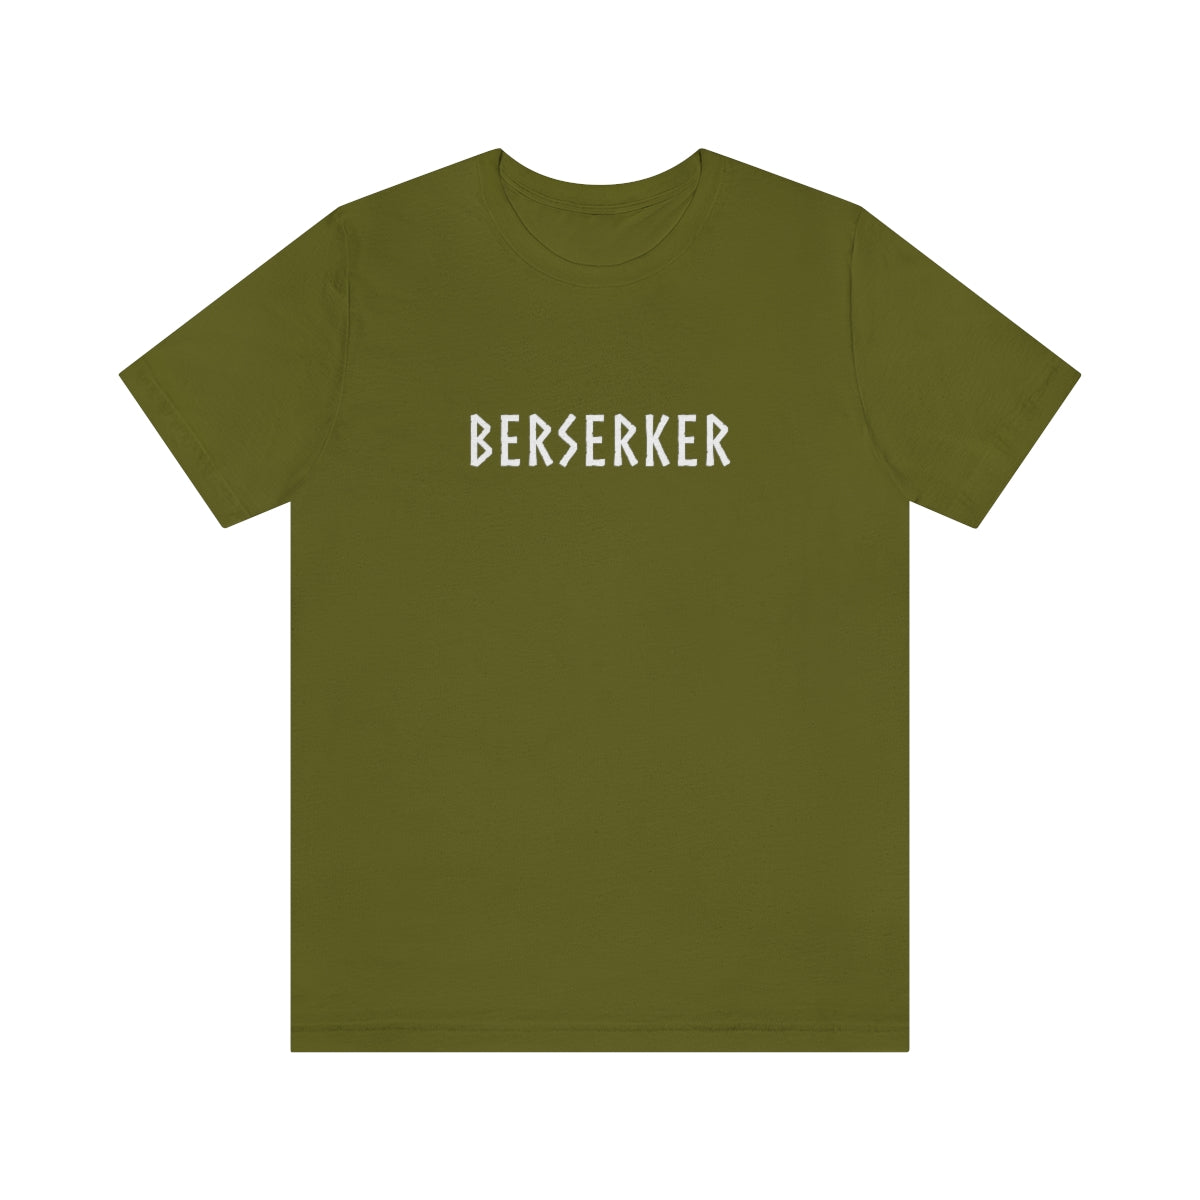 Berserker Unisex T-Shirt Scandinavian Design Studio